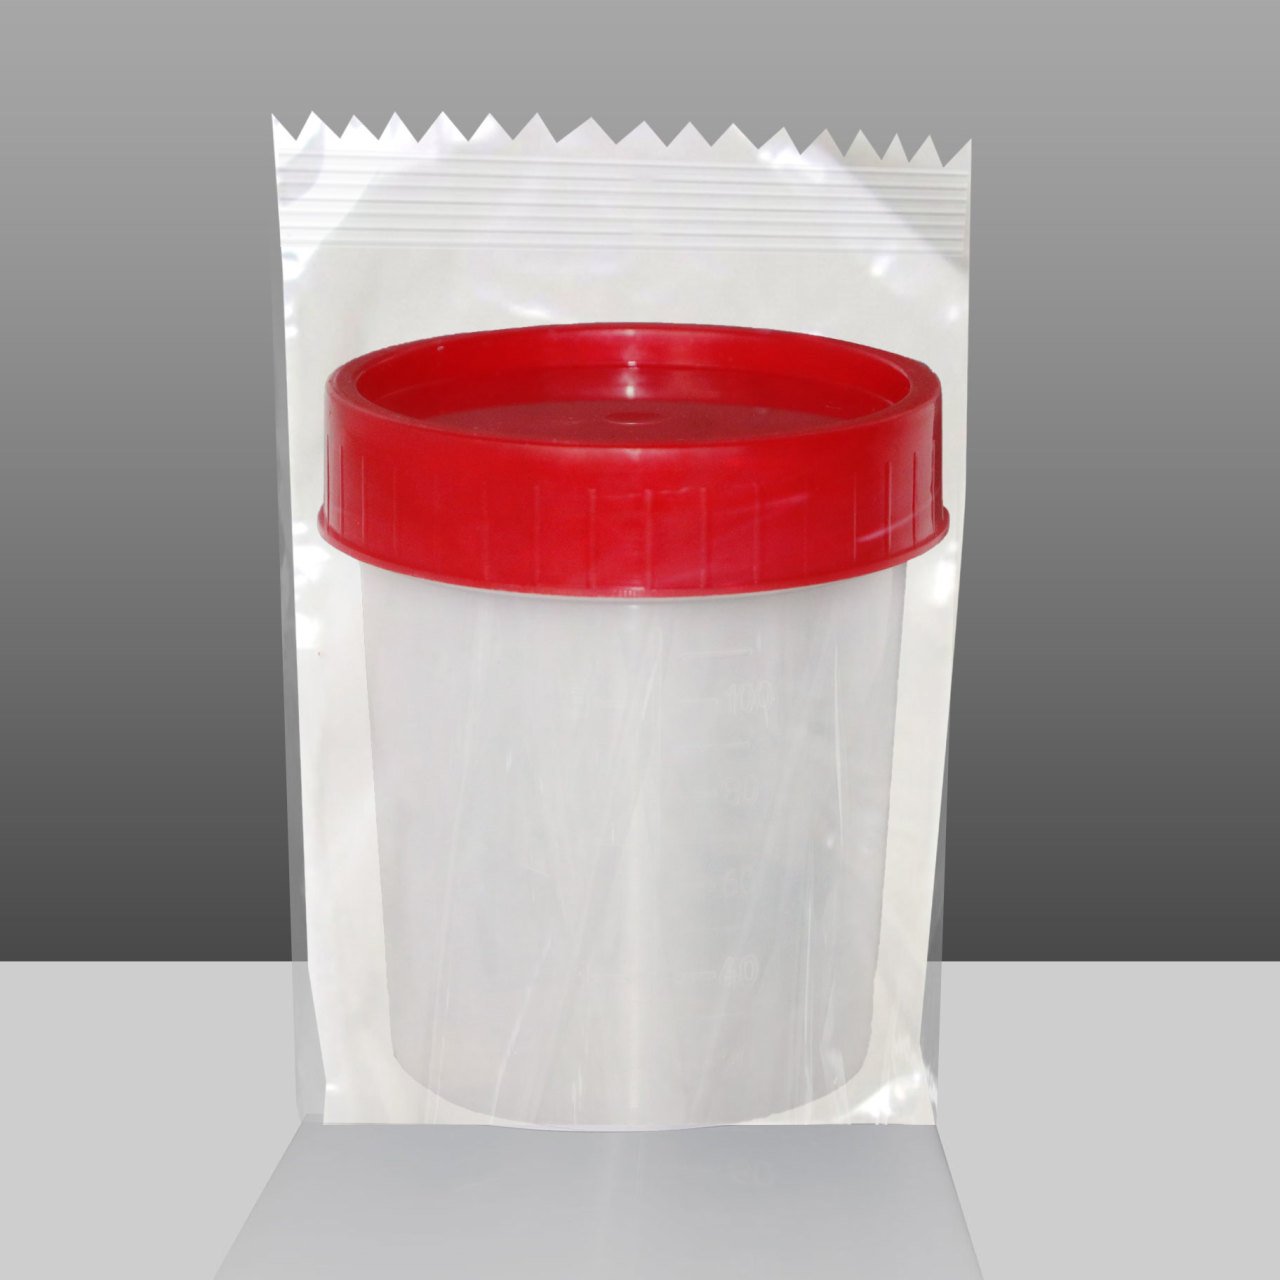 İdrar Toplama Bardağı 100 ml (Non Steril / Tekli Poşetli) / Urine Collection Container 100 ml (Non Steril / Packed)